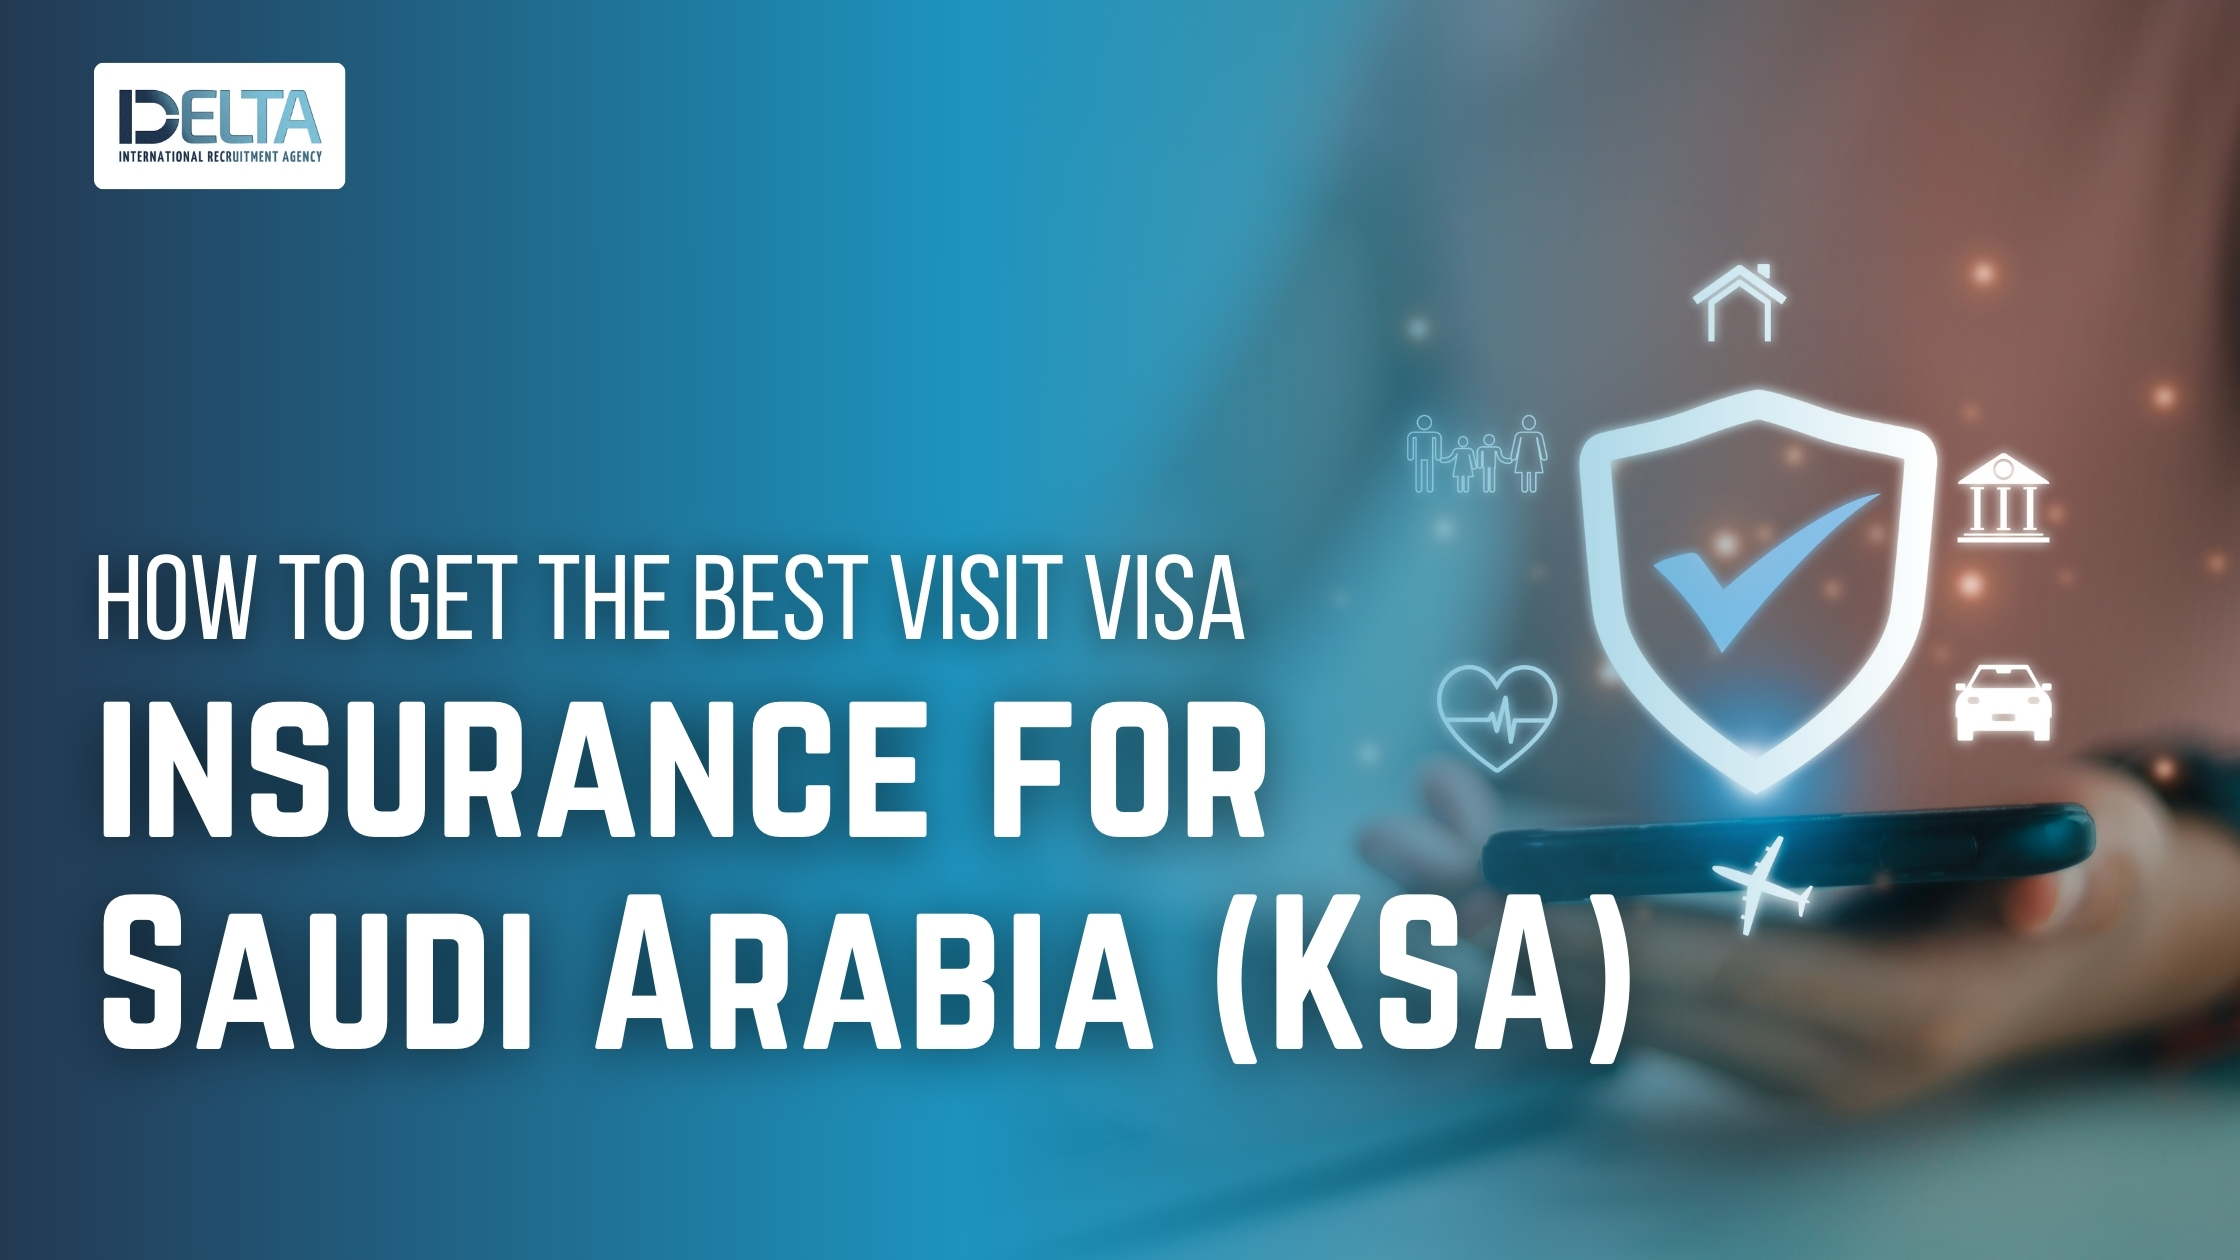 How to Get the Best Visit Visa Insurance for Saudi Arabia (KSA)